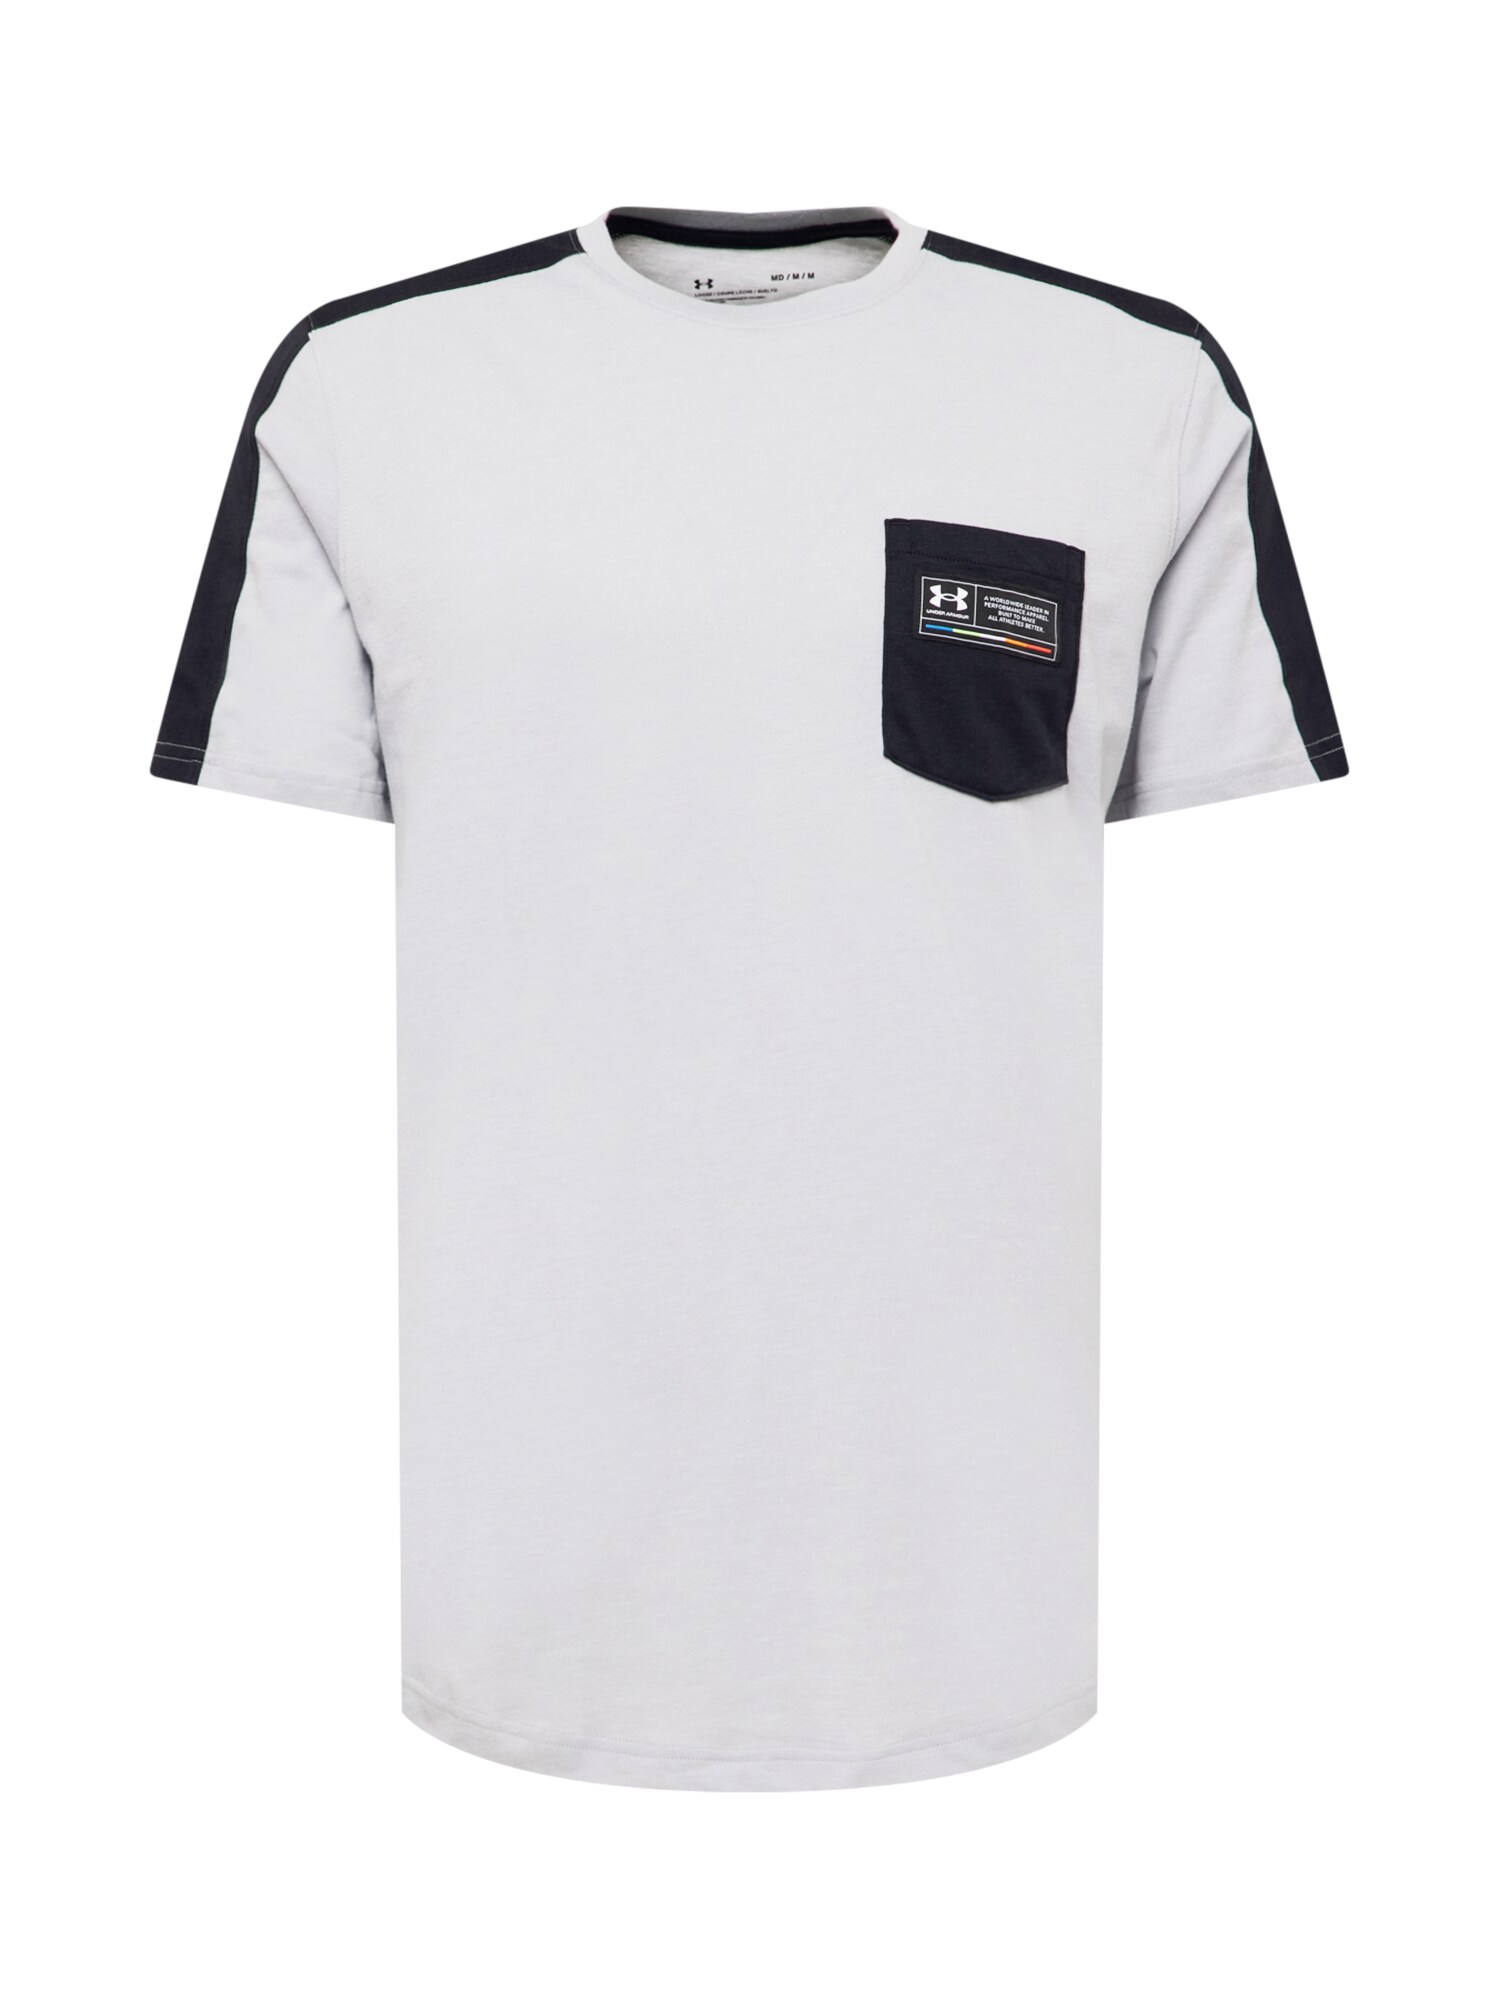 UNDER ARMOUR Funkcionalna majica  svetlo siva / črna / bela